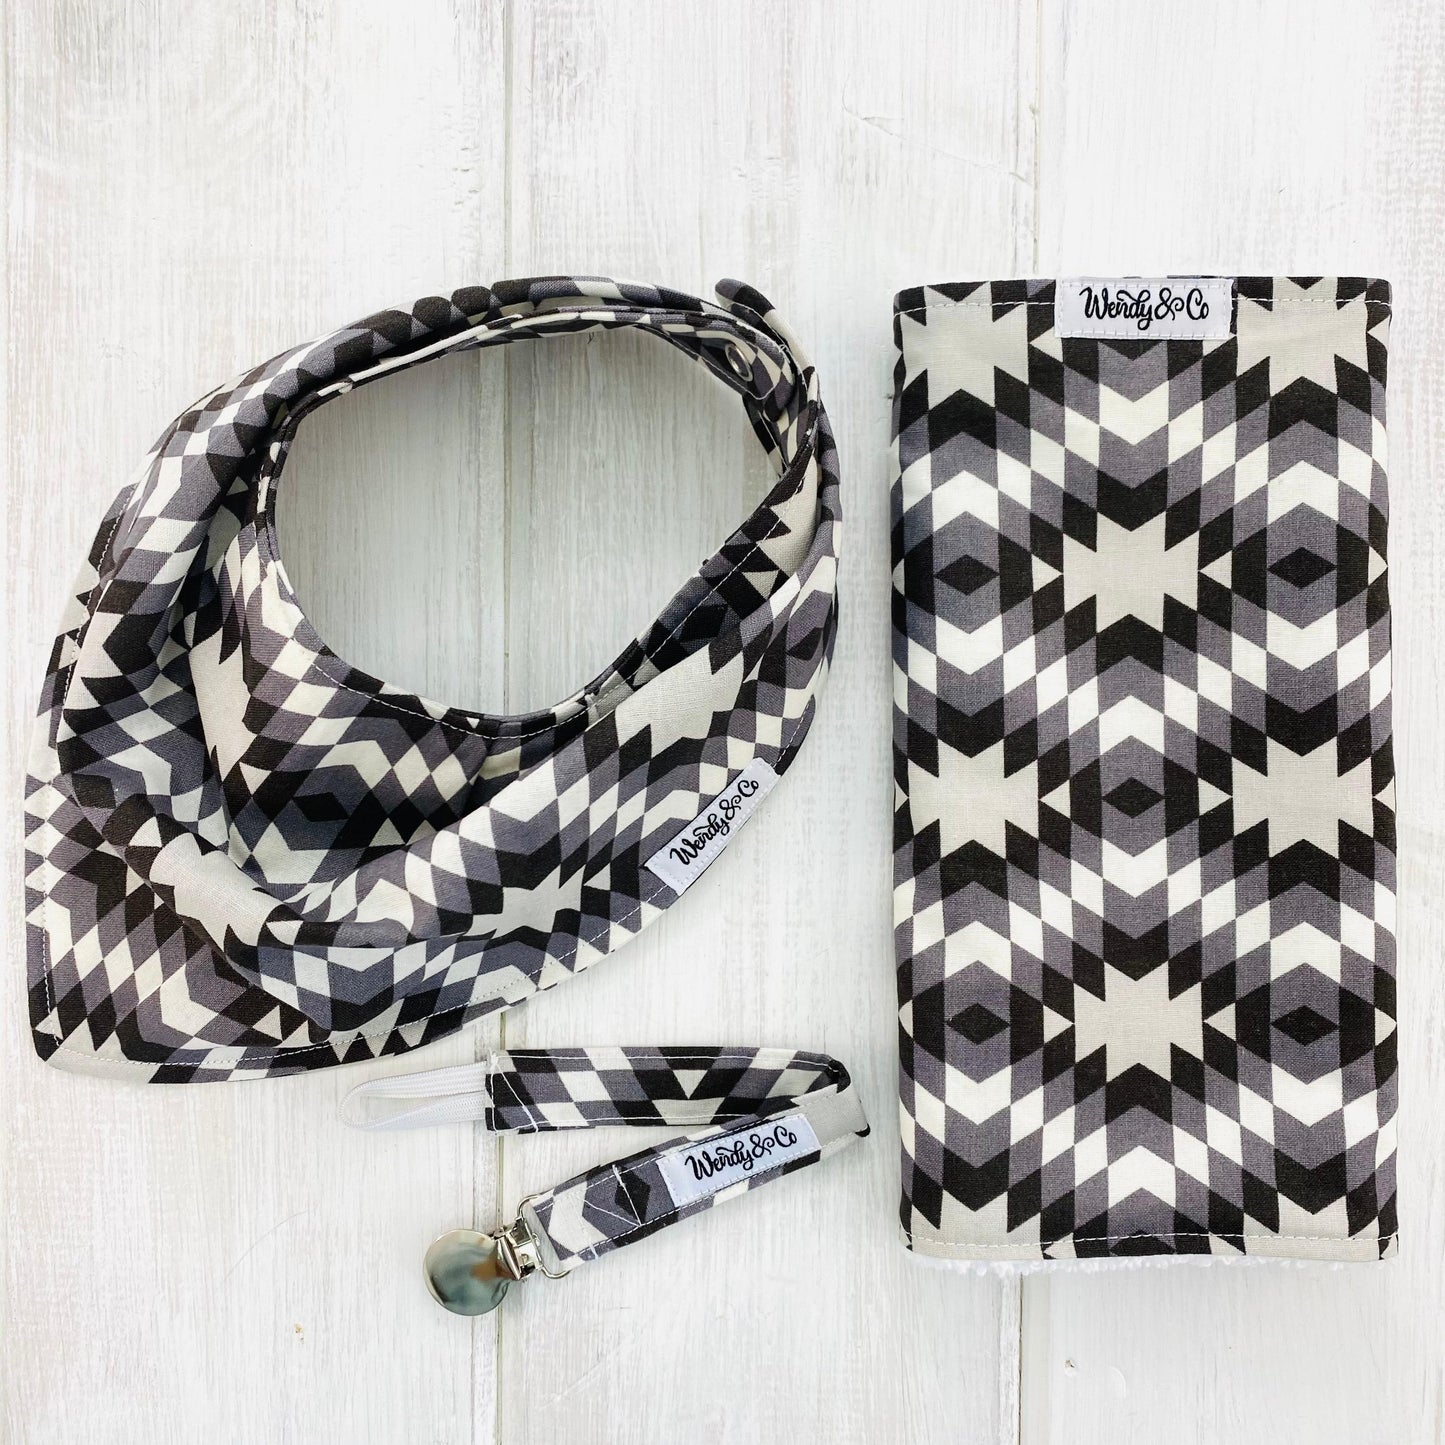 Handmade burp cloth, paci clip and bandana bib in southwest print in grays, black, white.